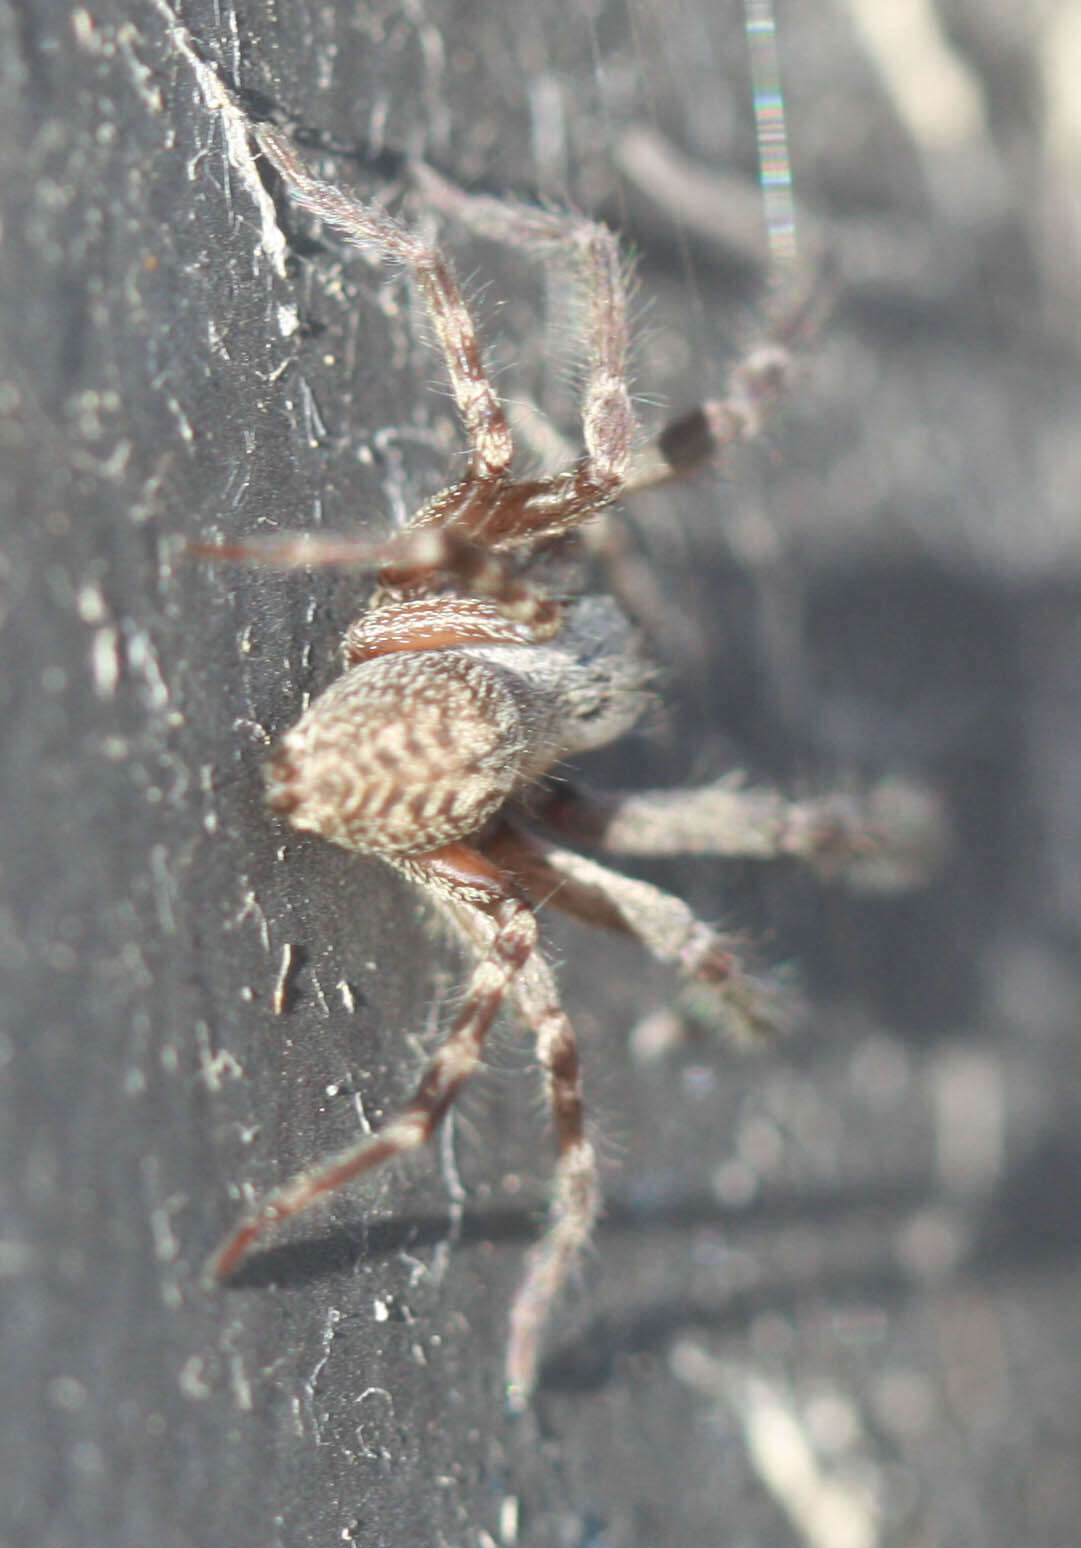 Image of Desid spider